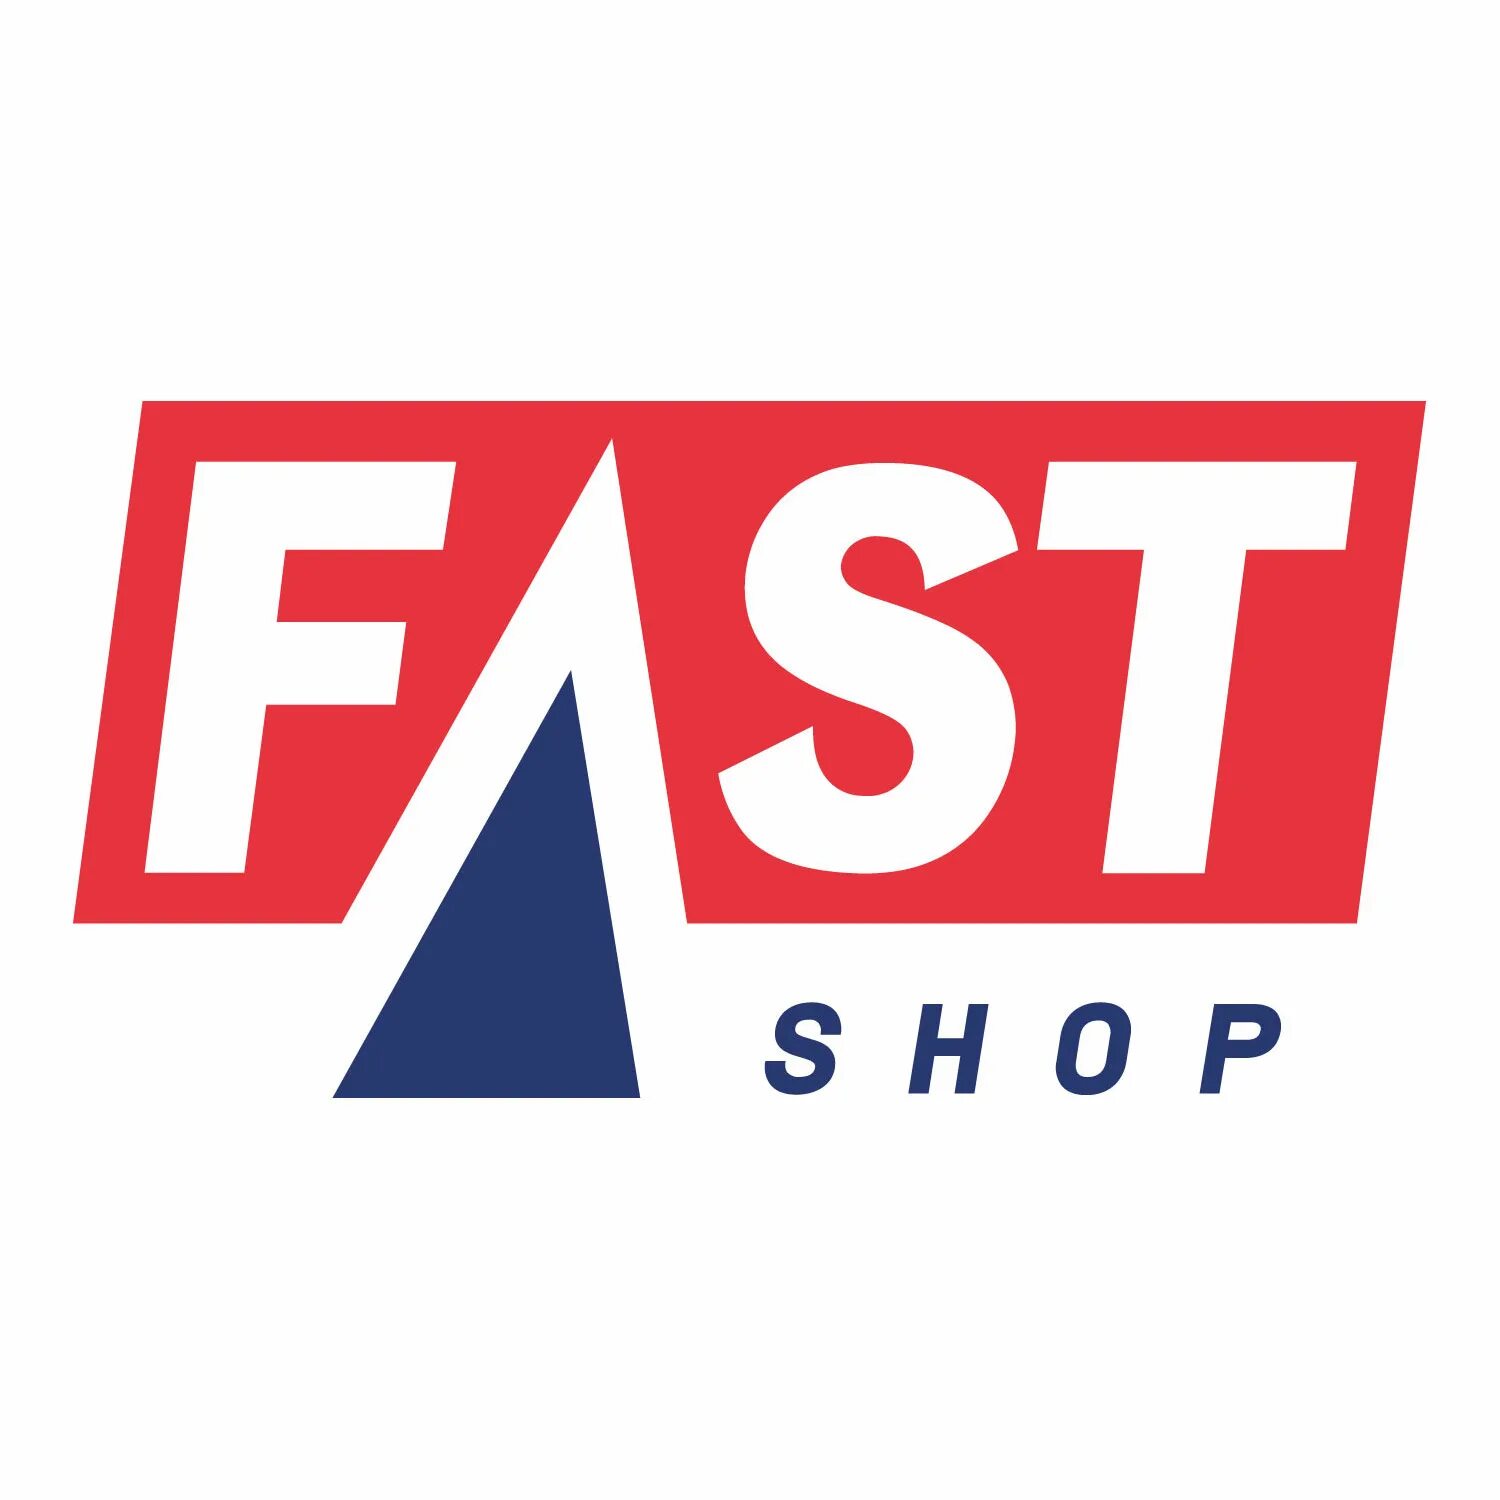 Фаст шоп. Fastshop. Fast shop интернет магазин. Fast shop logo. Fast shopping